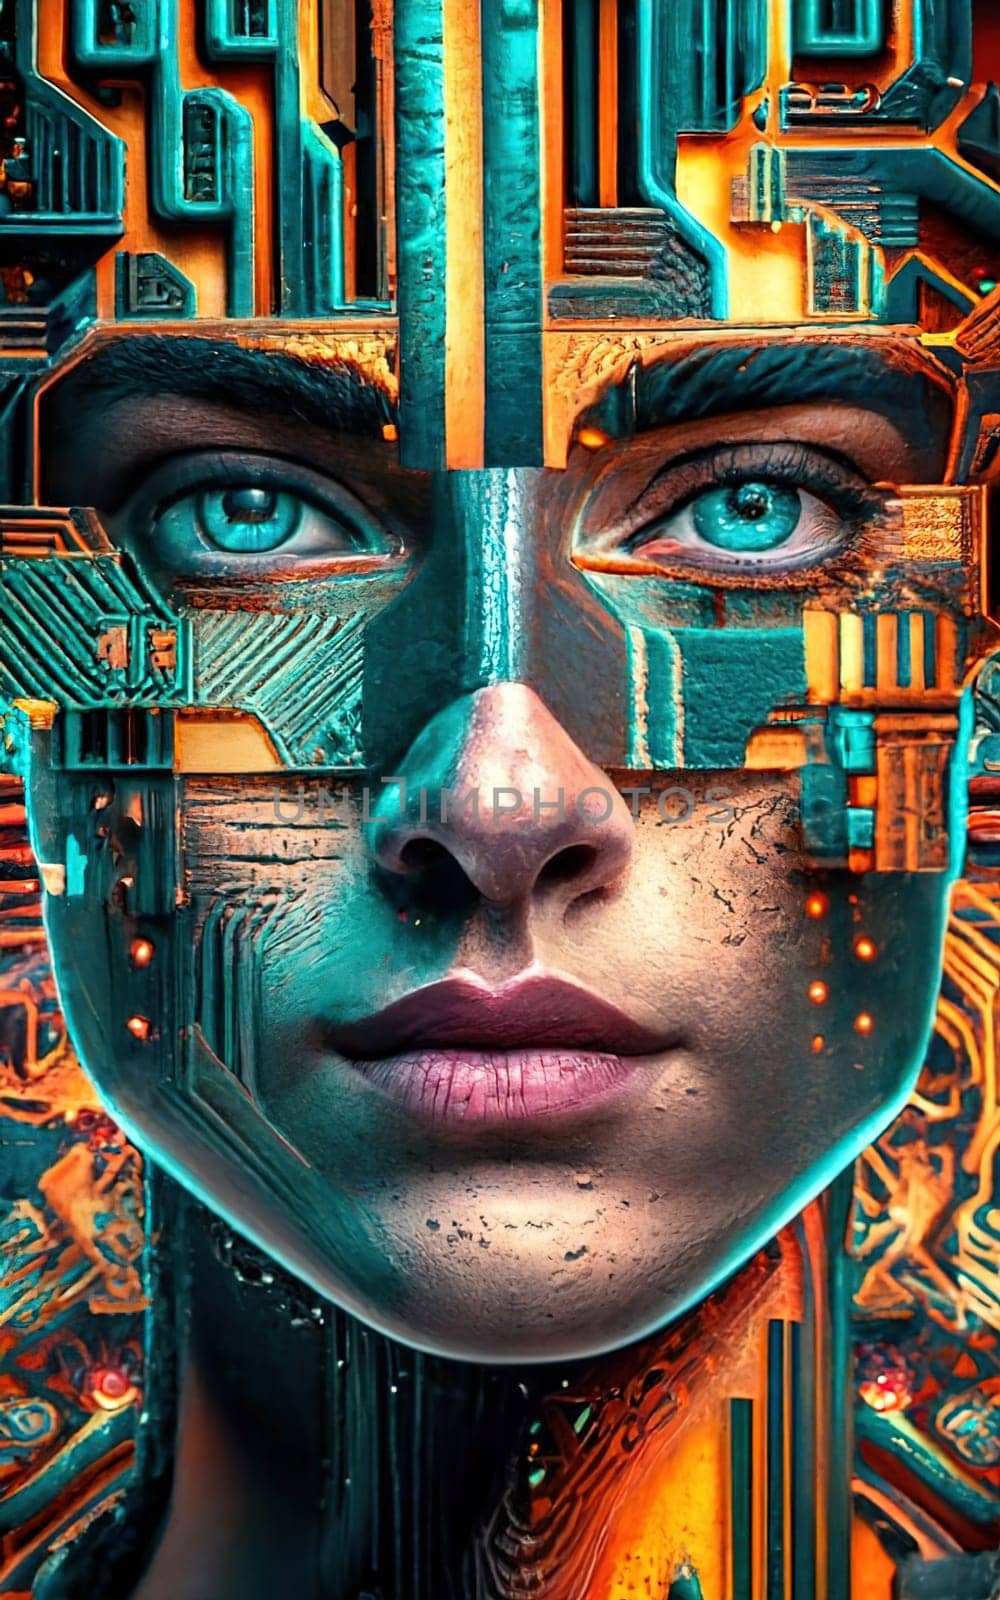 A handsome digital face, neuron cells, circuit fault face, Matrix Code, retro futuristic Cyberpunk urban pixels, environmental sculpture, vary, portrait by igor010